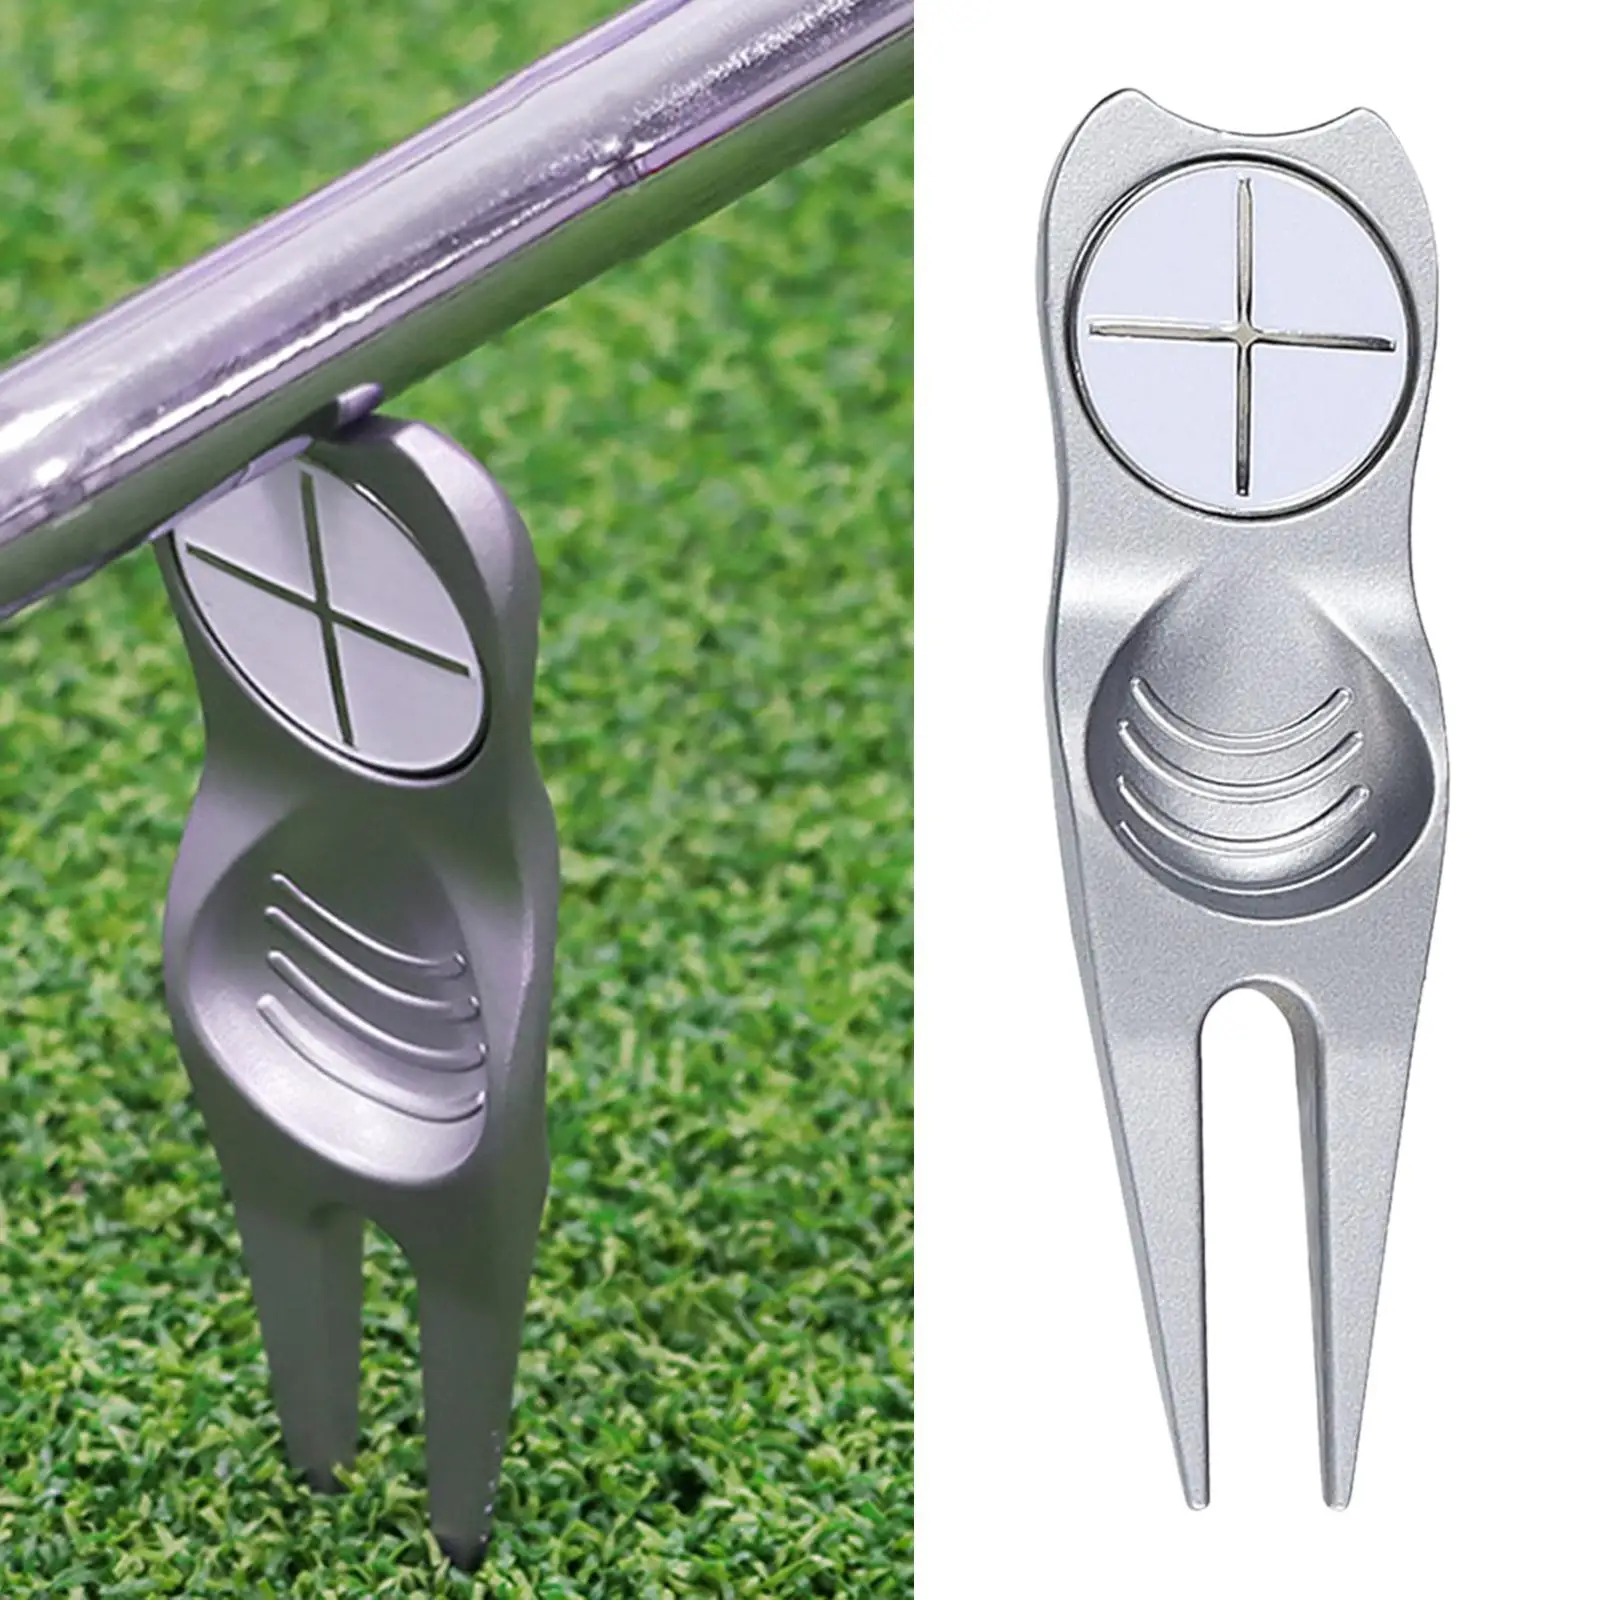 Golf Divot Repair Tool Magnetic Golf Ball Marker Portable Putting Green Fork Golf Accessories